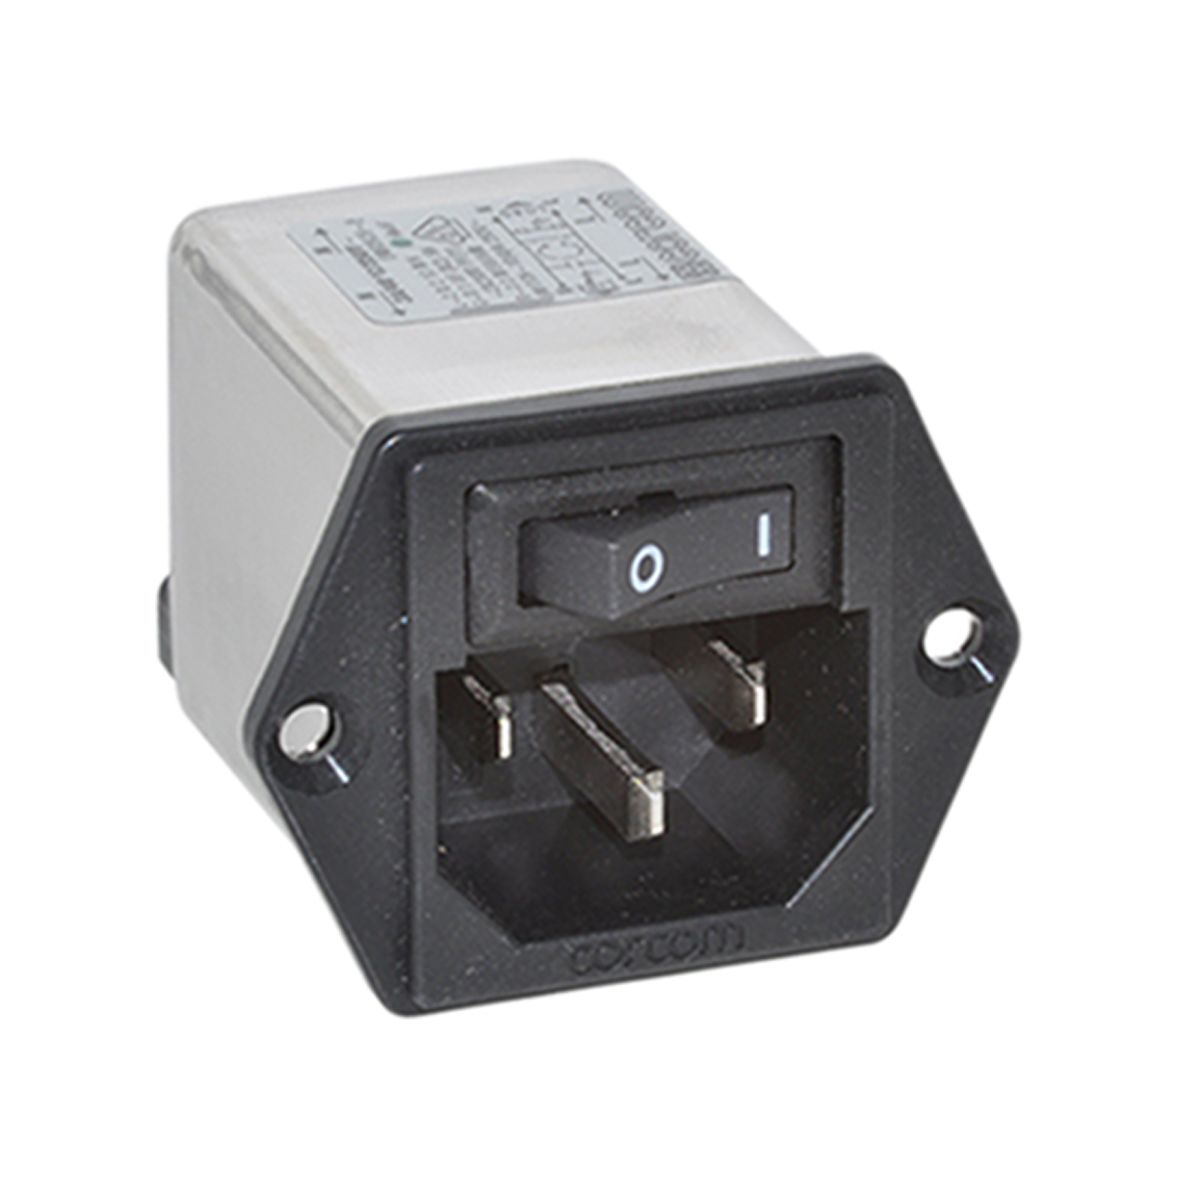 TE Connectivity C14 IEC Filter Stecker mit 1-Pol Schalter, 120 V ac, 250 V ac / 1A, Tafelmontage / Kabelschuh-Anschluss